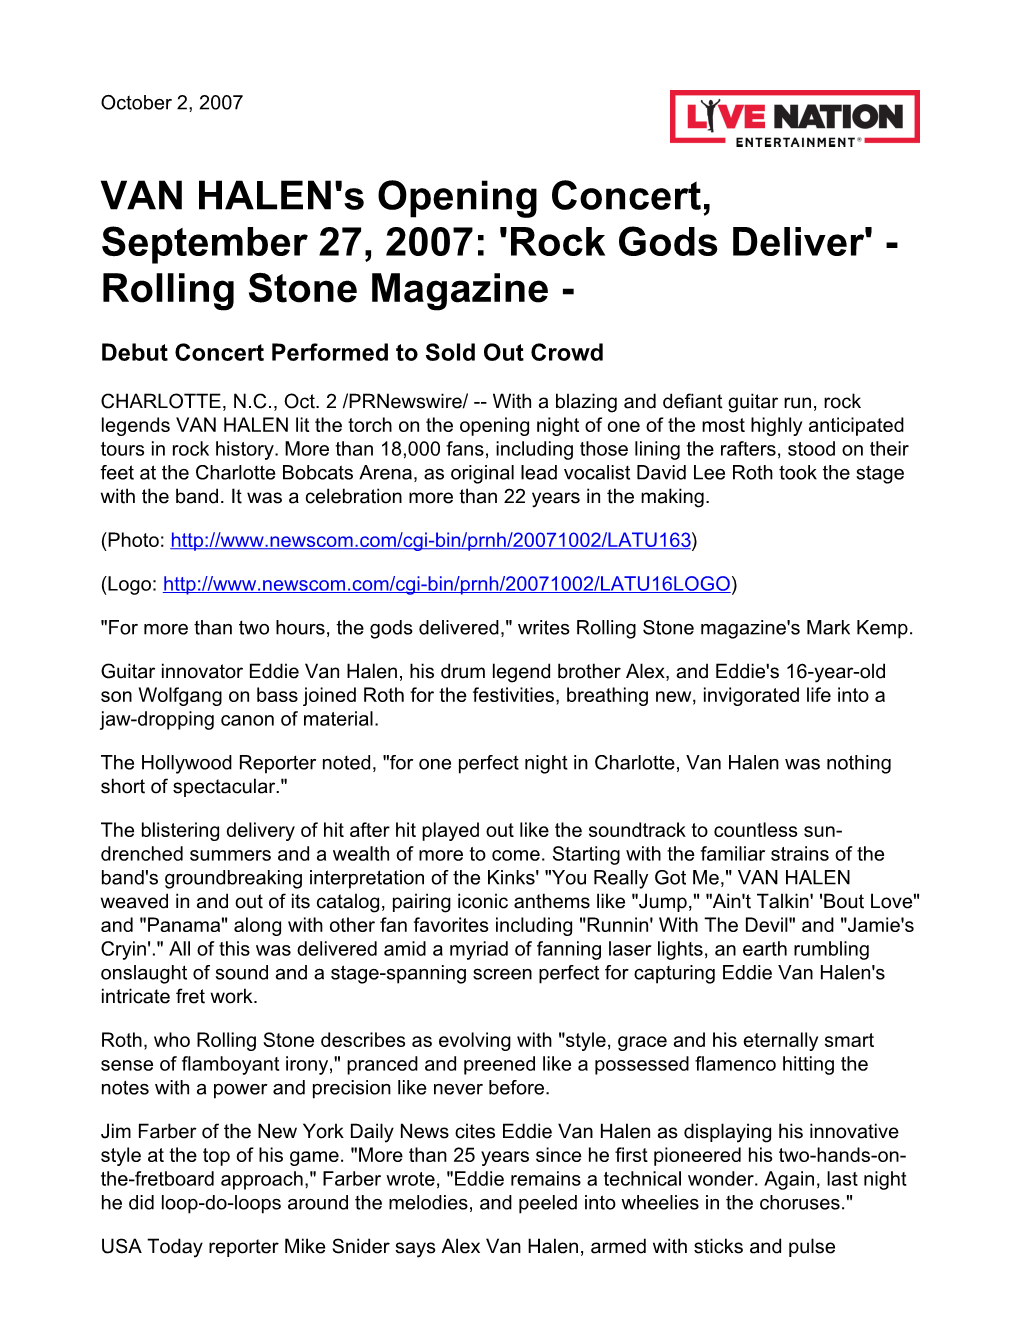 VAN HALEN's Opening Concert, September 27, 2007: 'Rock Gods Deliver' - Rolling Stone Magazine